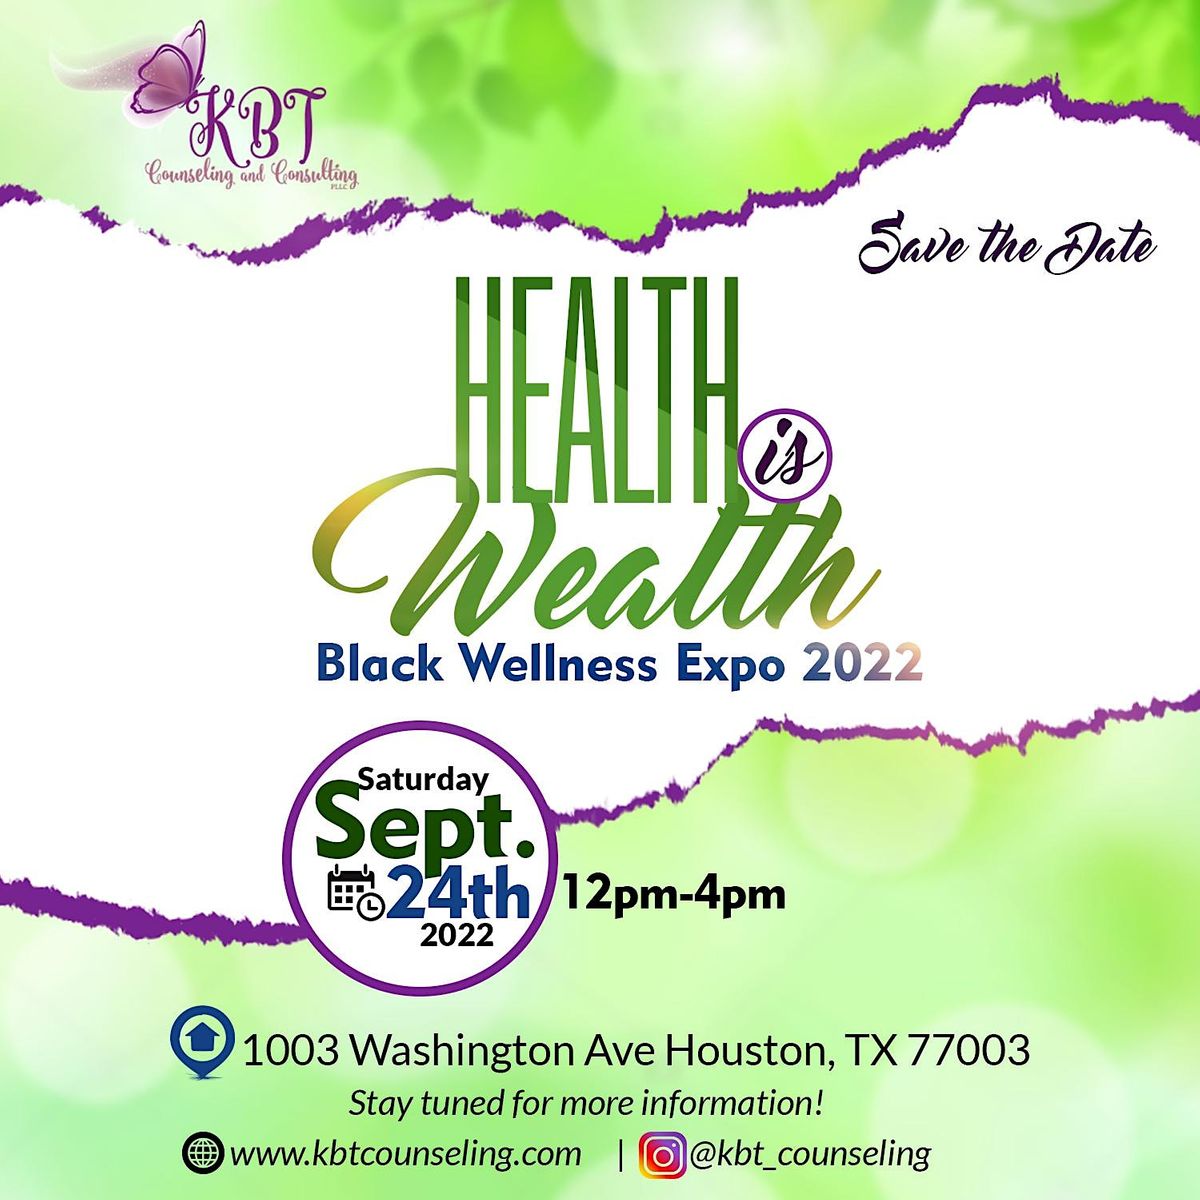 Health is Wealth: Black Wellness Expo 2022